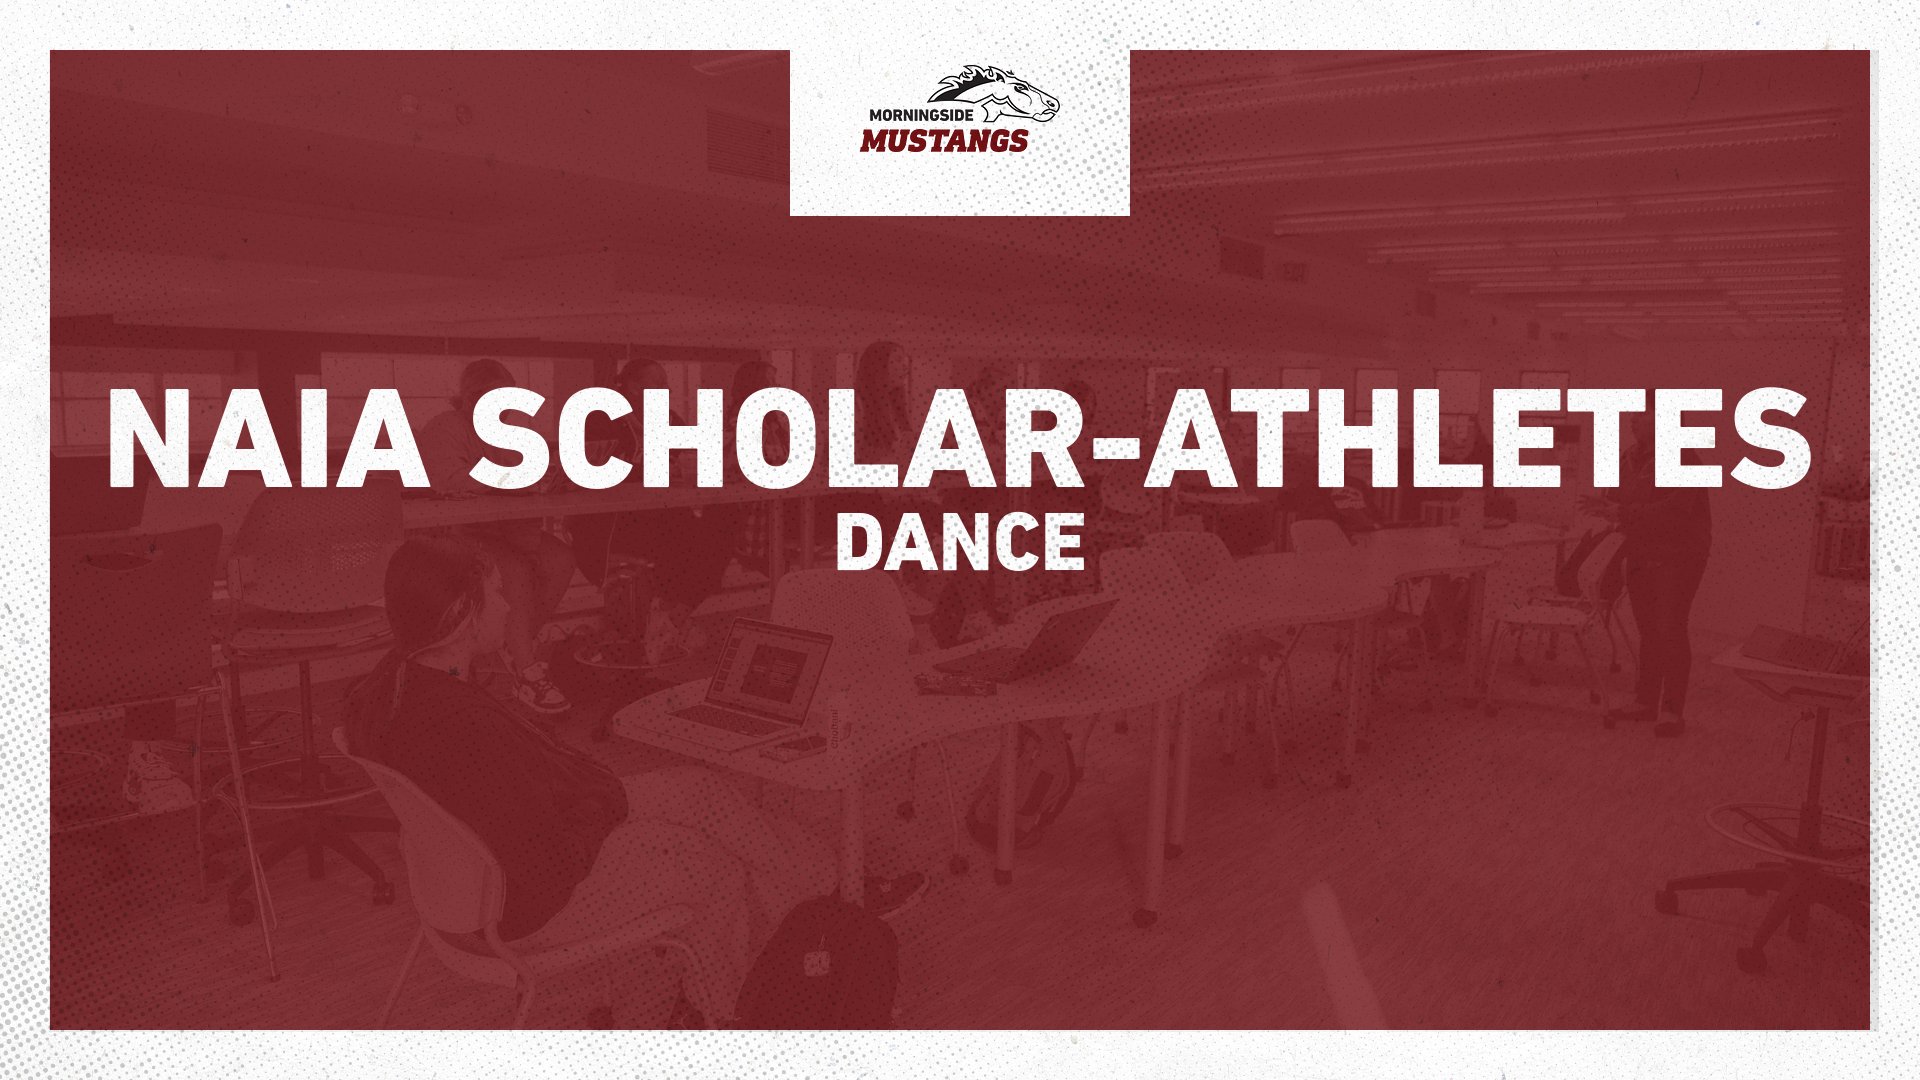 Dance places four on NAIA scholar-athlete list